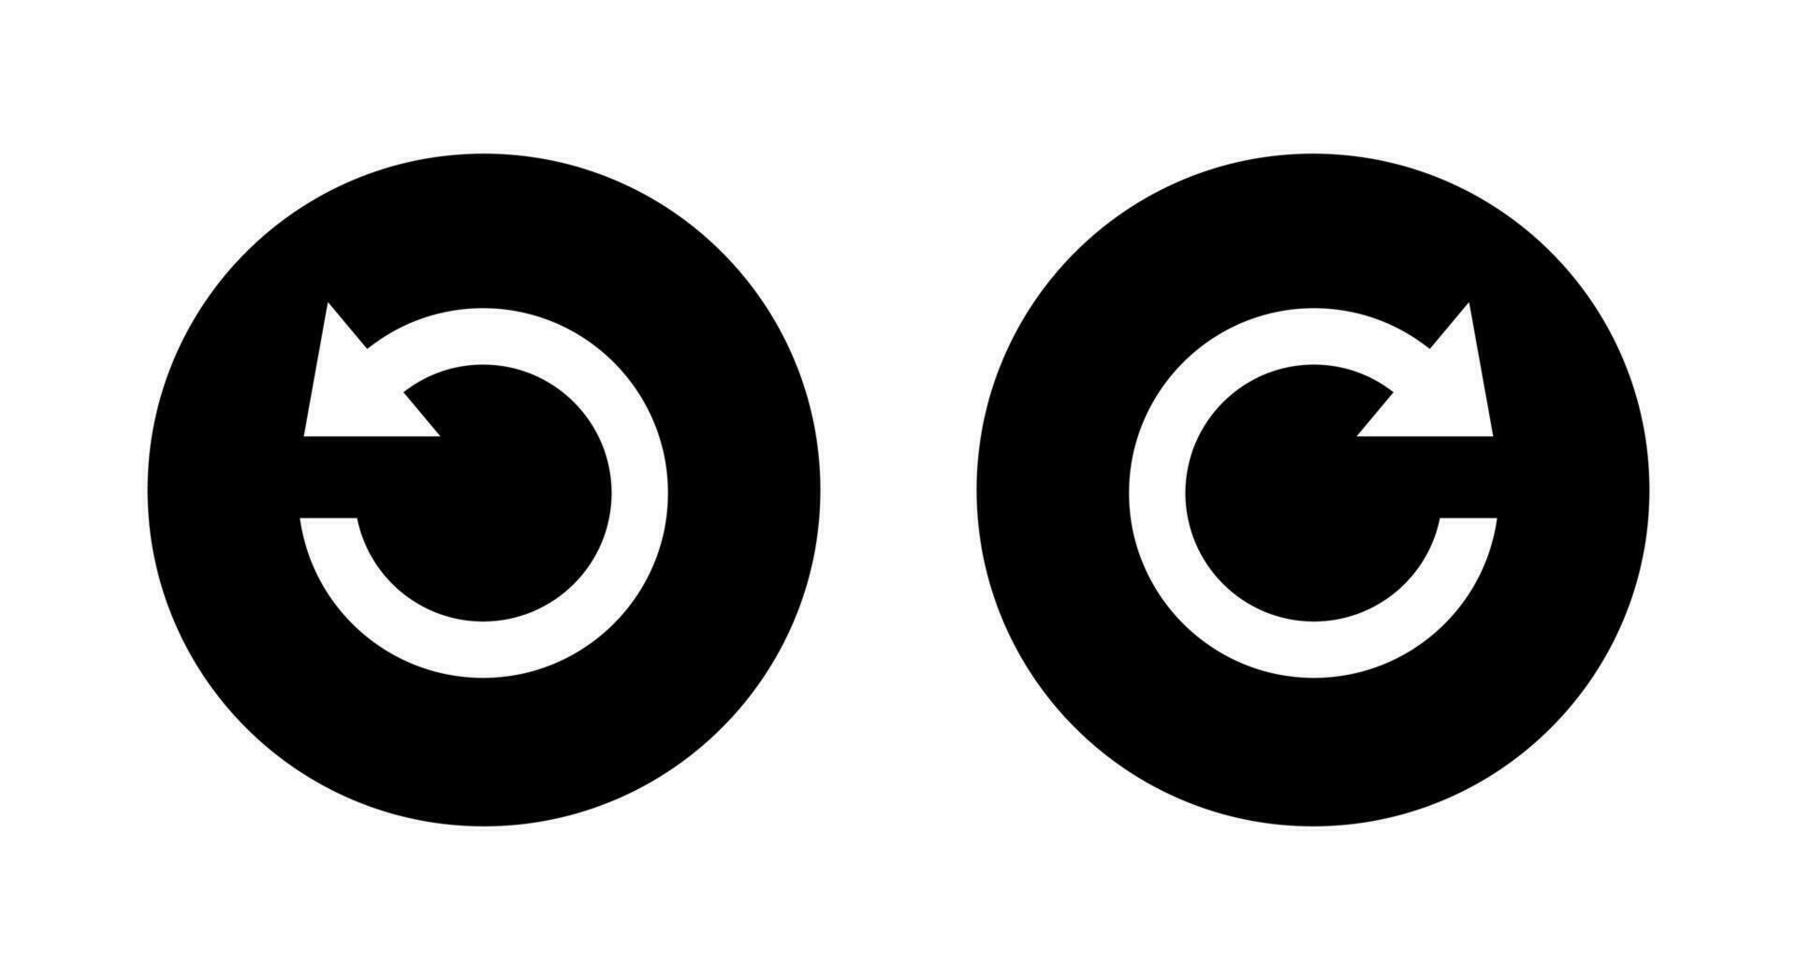 Redo and undo icon vector. Circular arrow symbol isolated on circle background vector